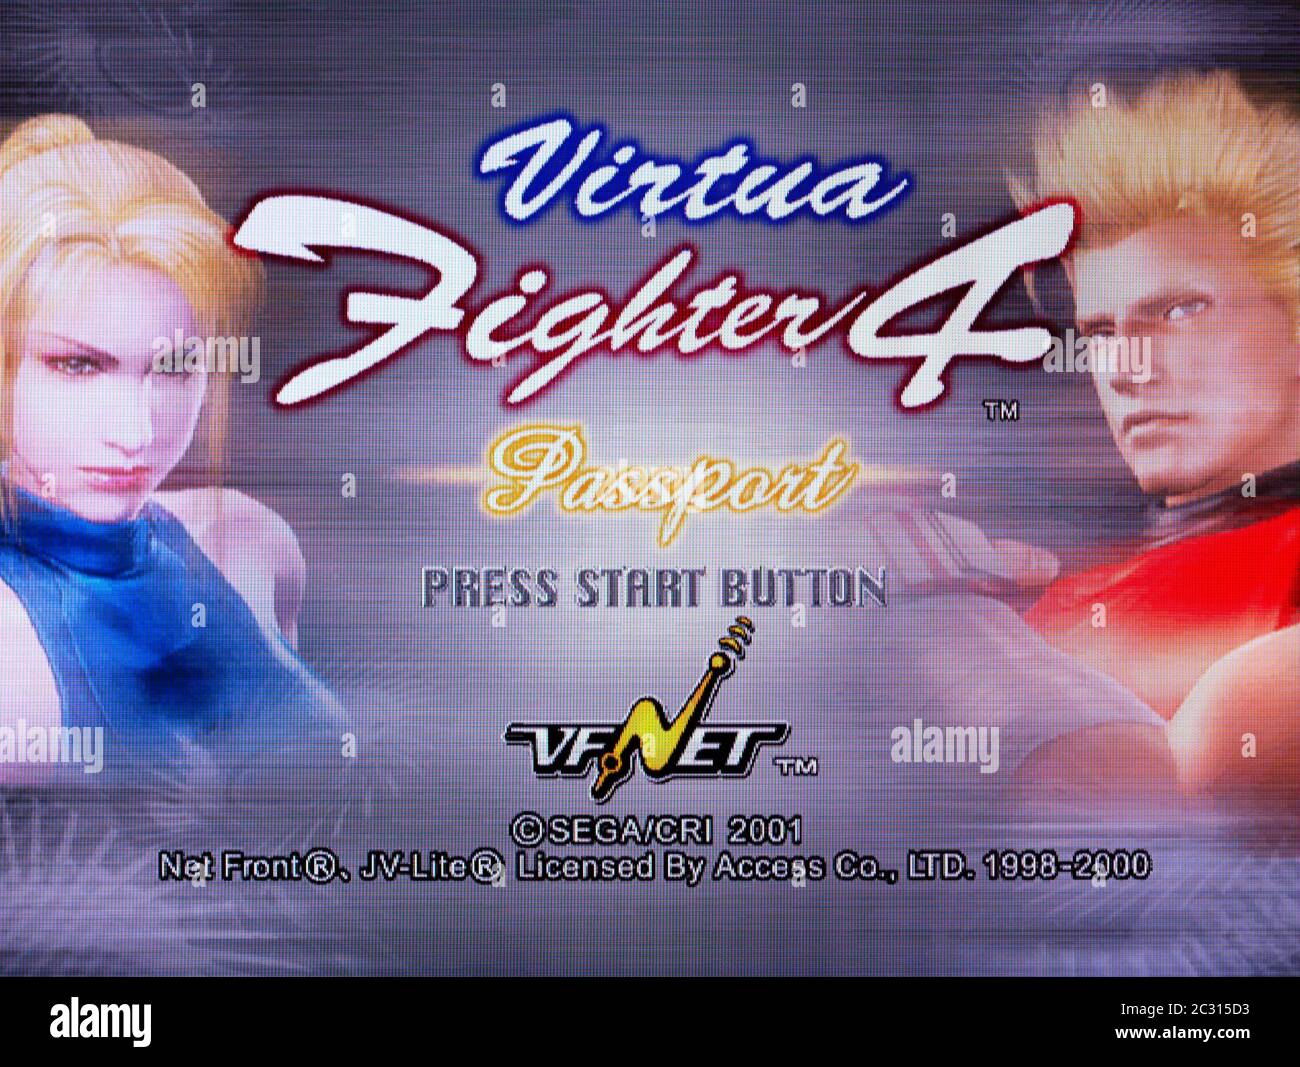 Virtua Fighter 4 Passport - Sega Dreamcast Videogame - Editorial use only Stock Photo